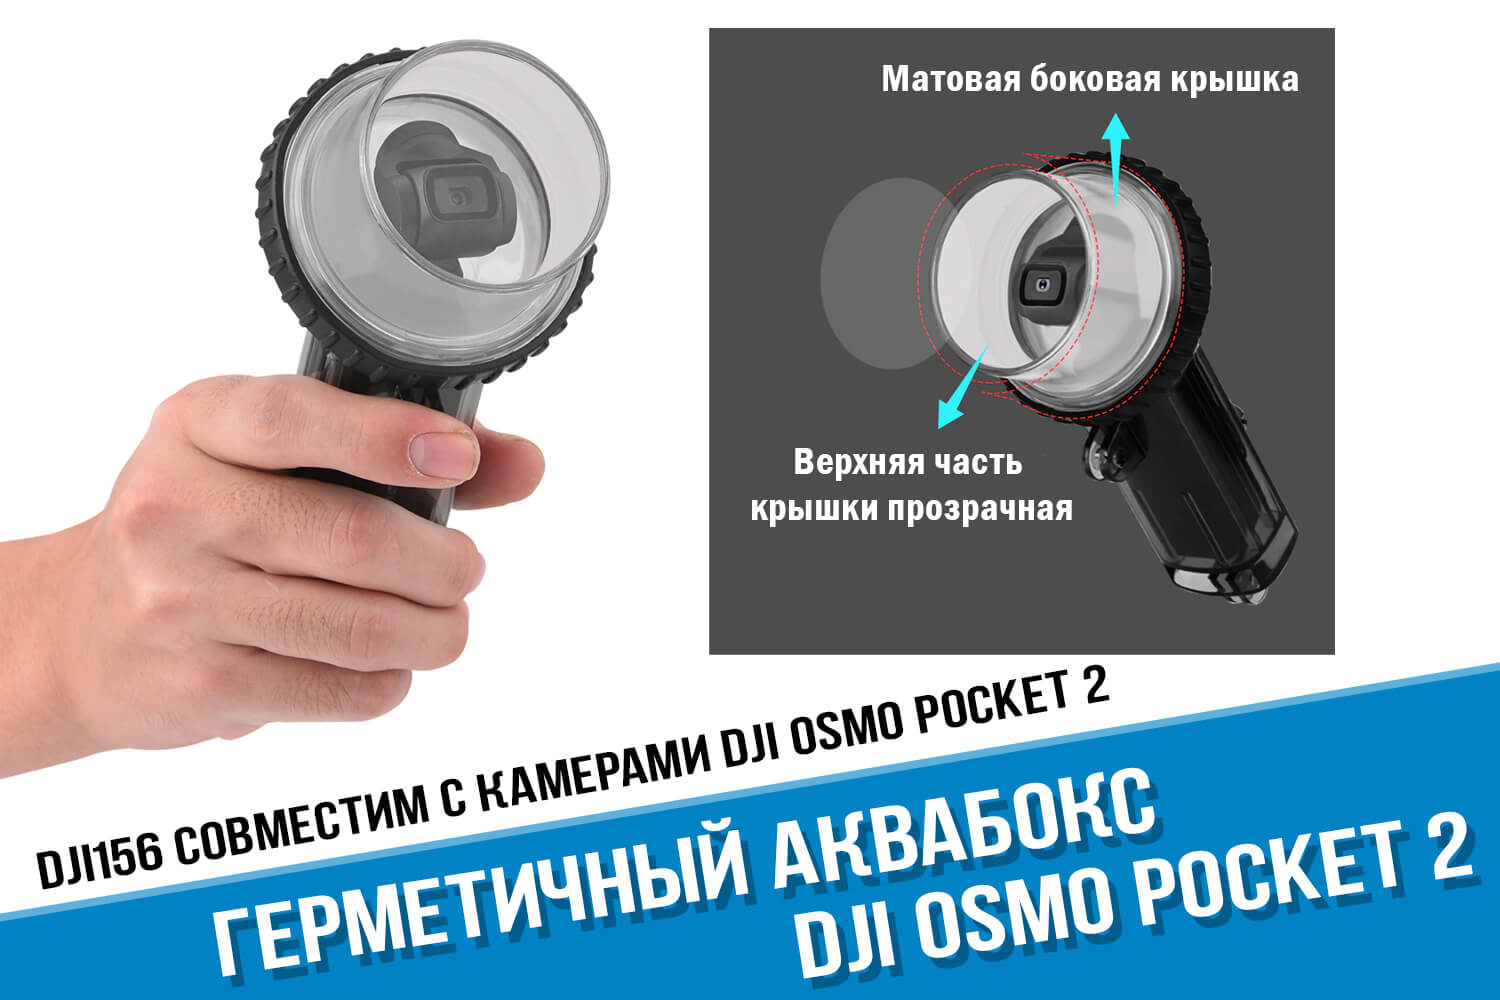 Герметичный бокс камеры DJI Osmo Pocket 2